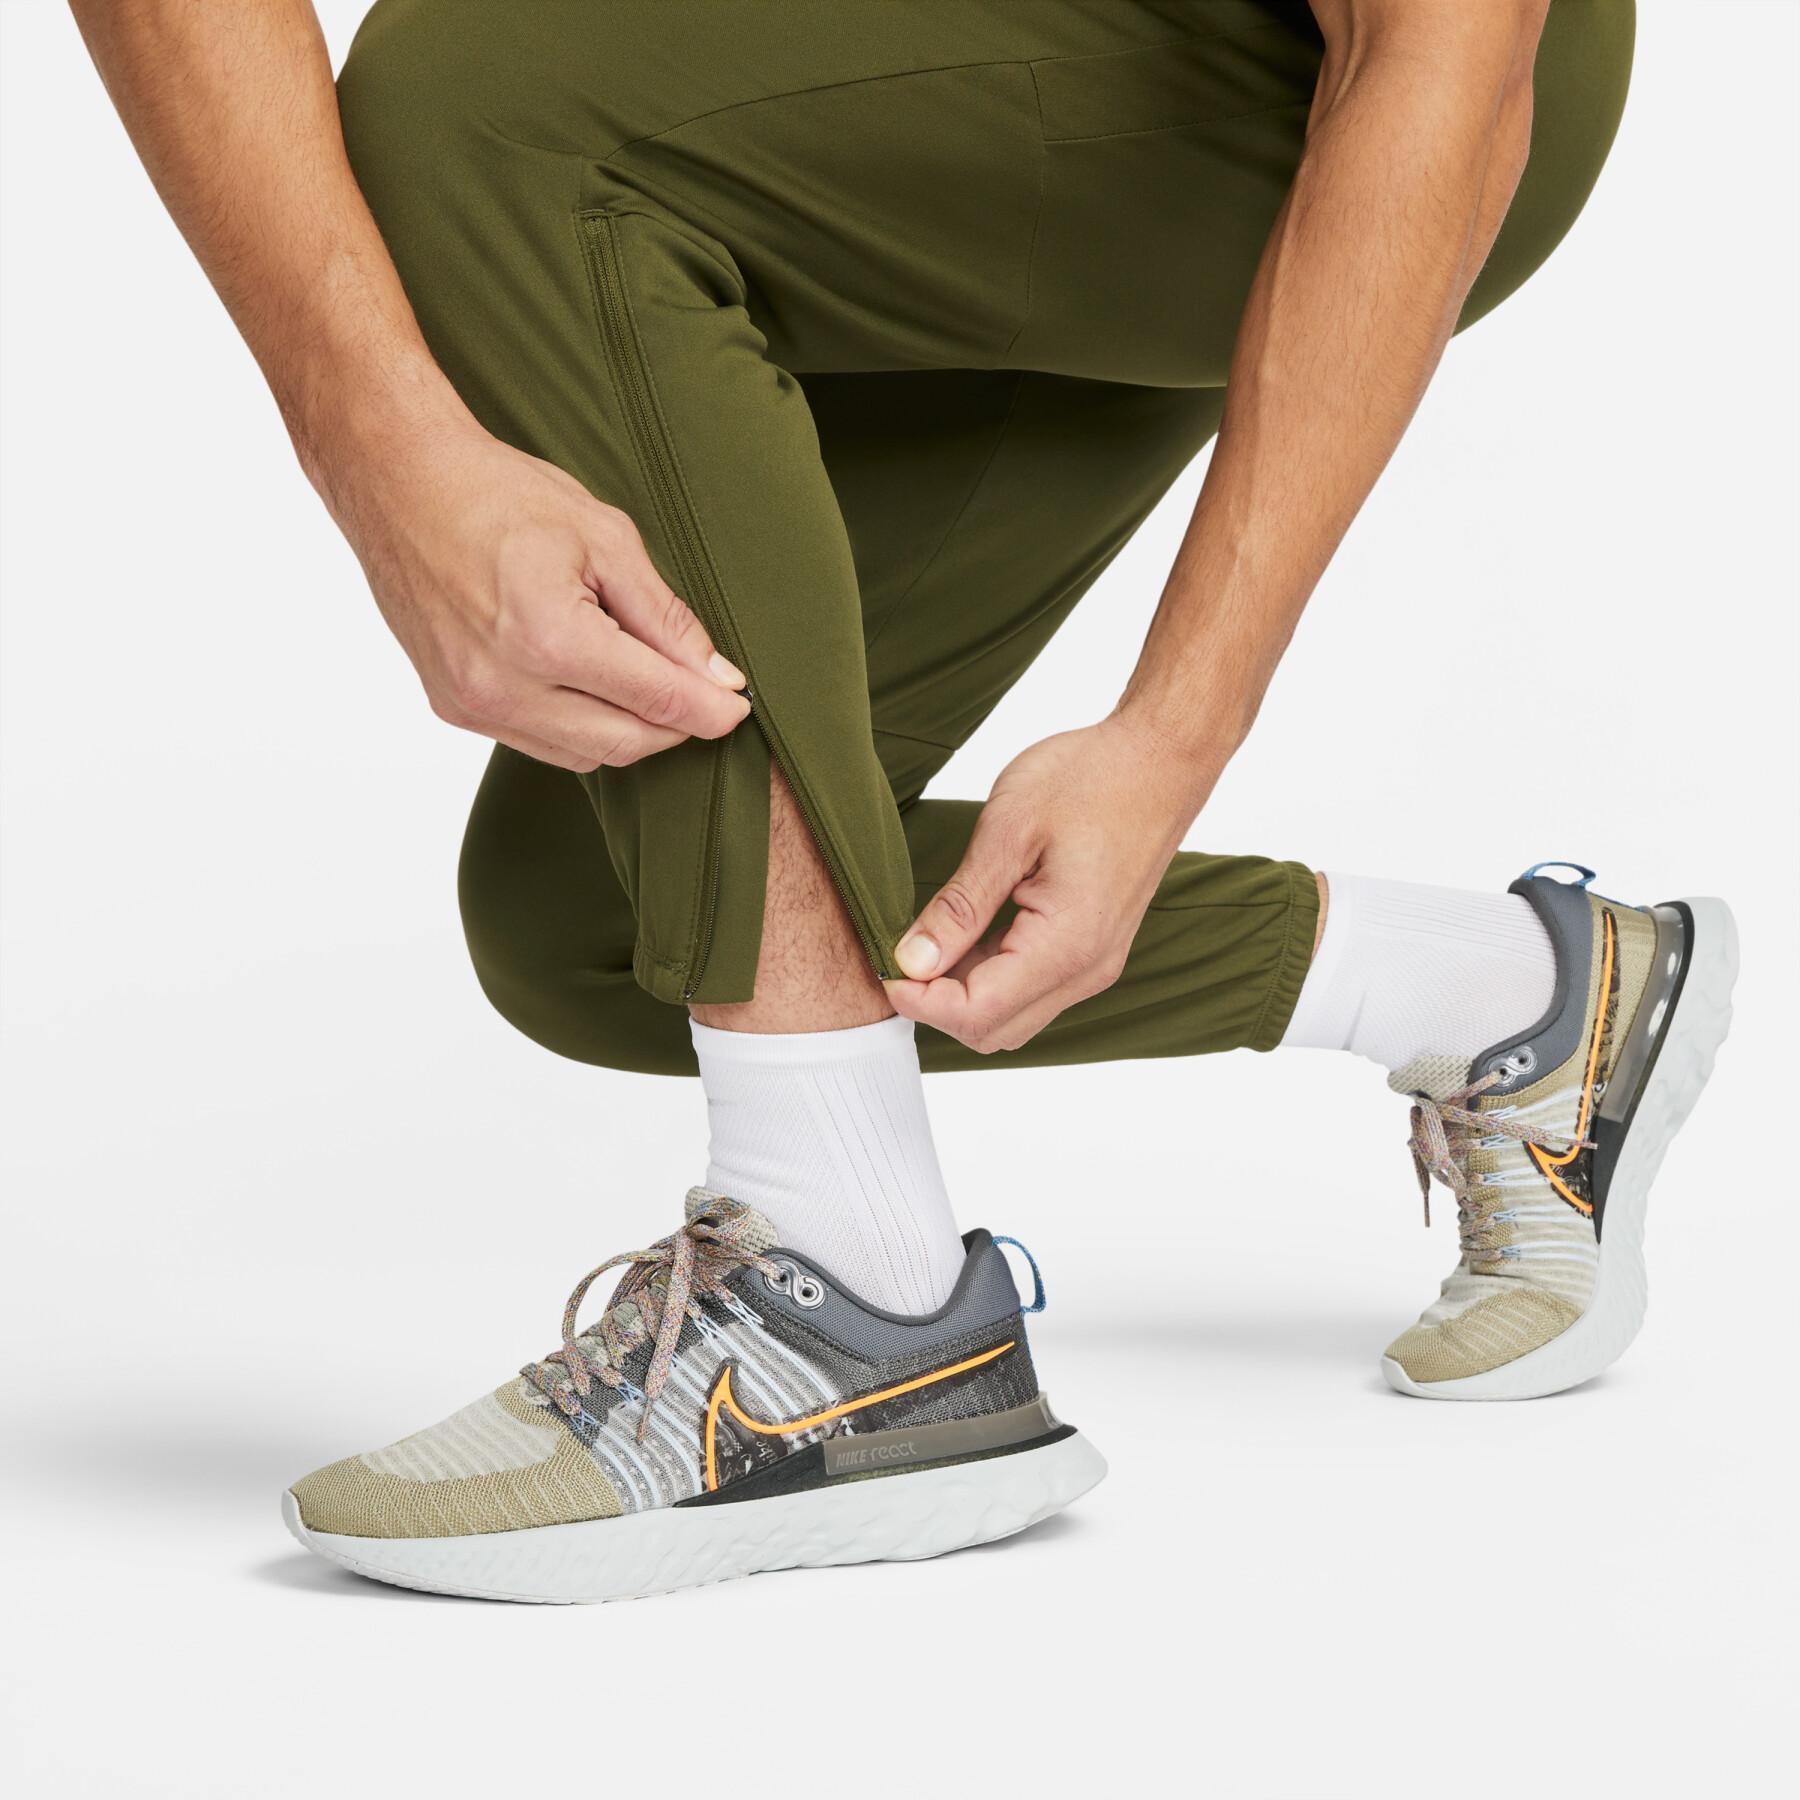 Nike Dri-FIT Challenger Woven Pants